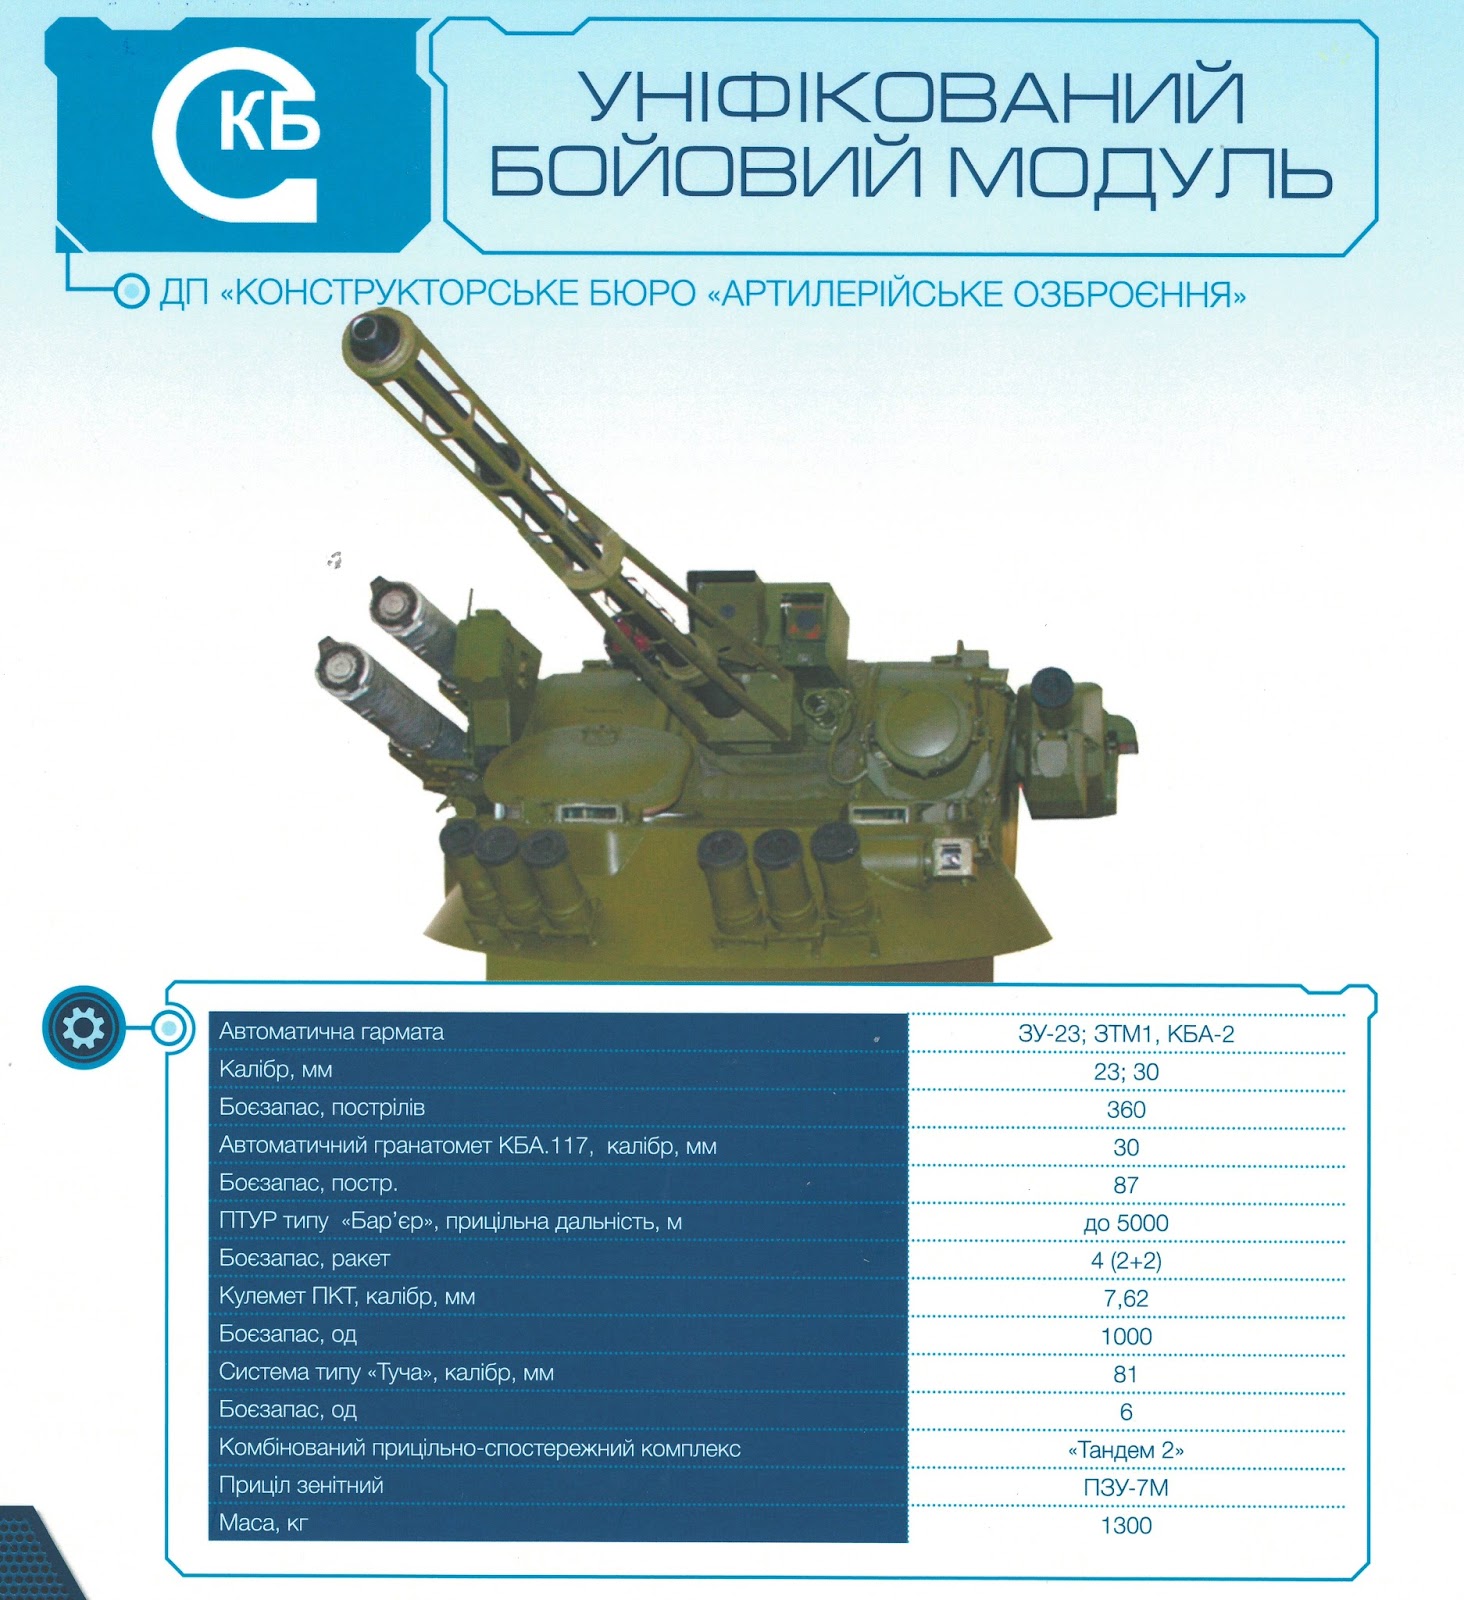 Ukrainian+combat+module+KBA-105+Shkval_1